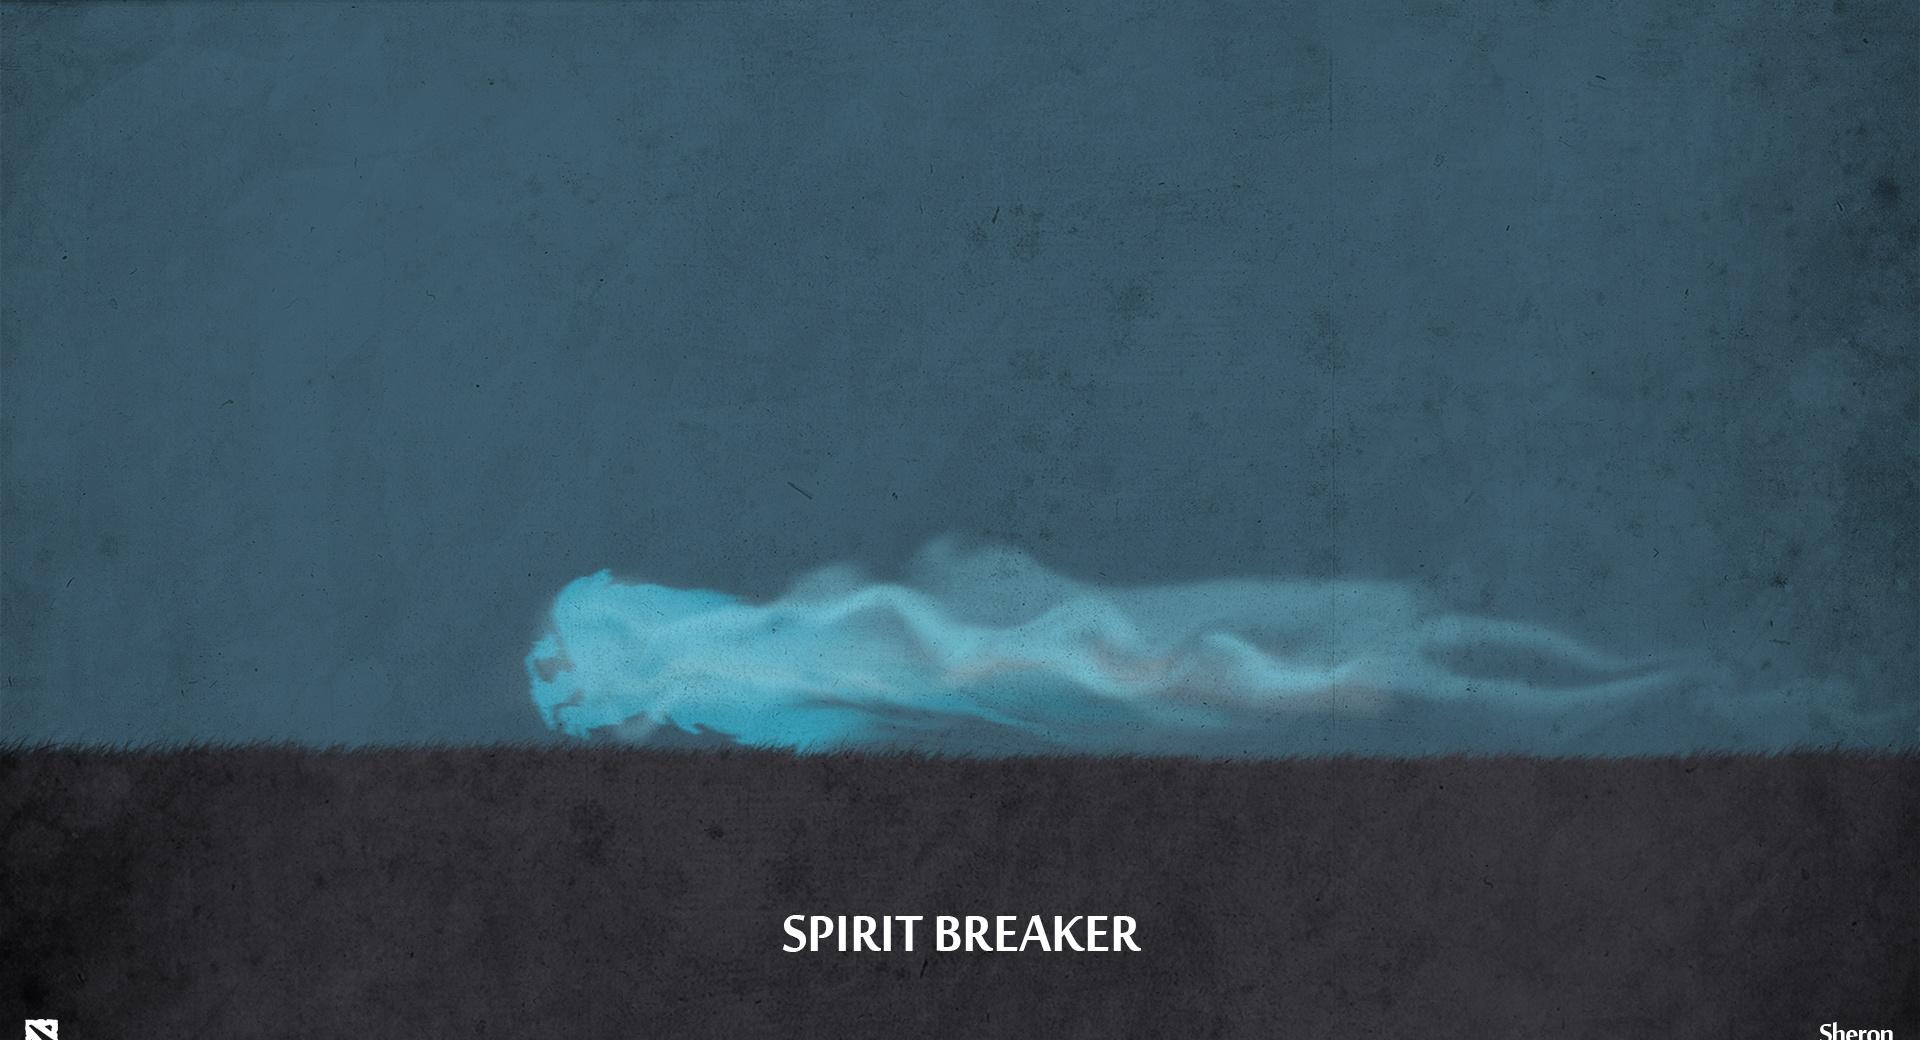 Spirit Breaker - DotA 2 at 1600 x 1200 size wallpapers HD quality